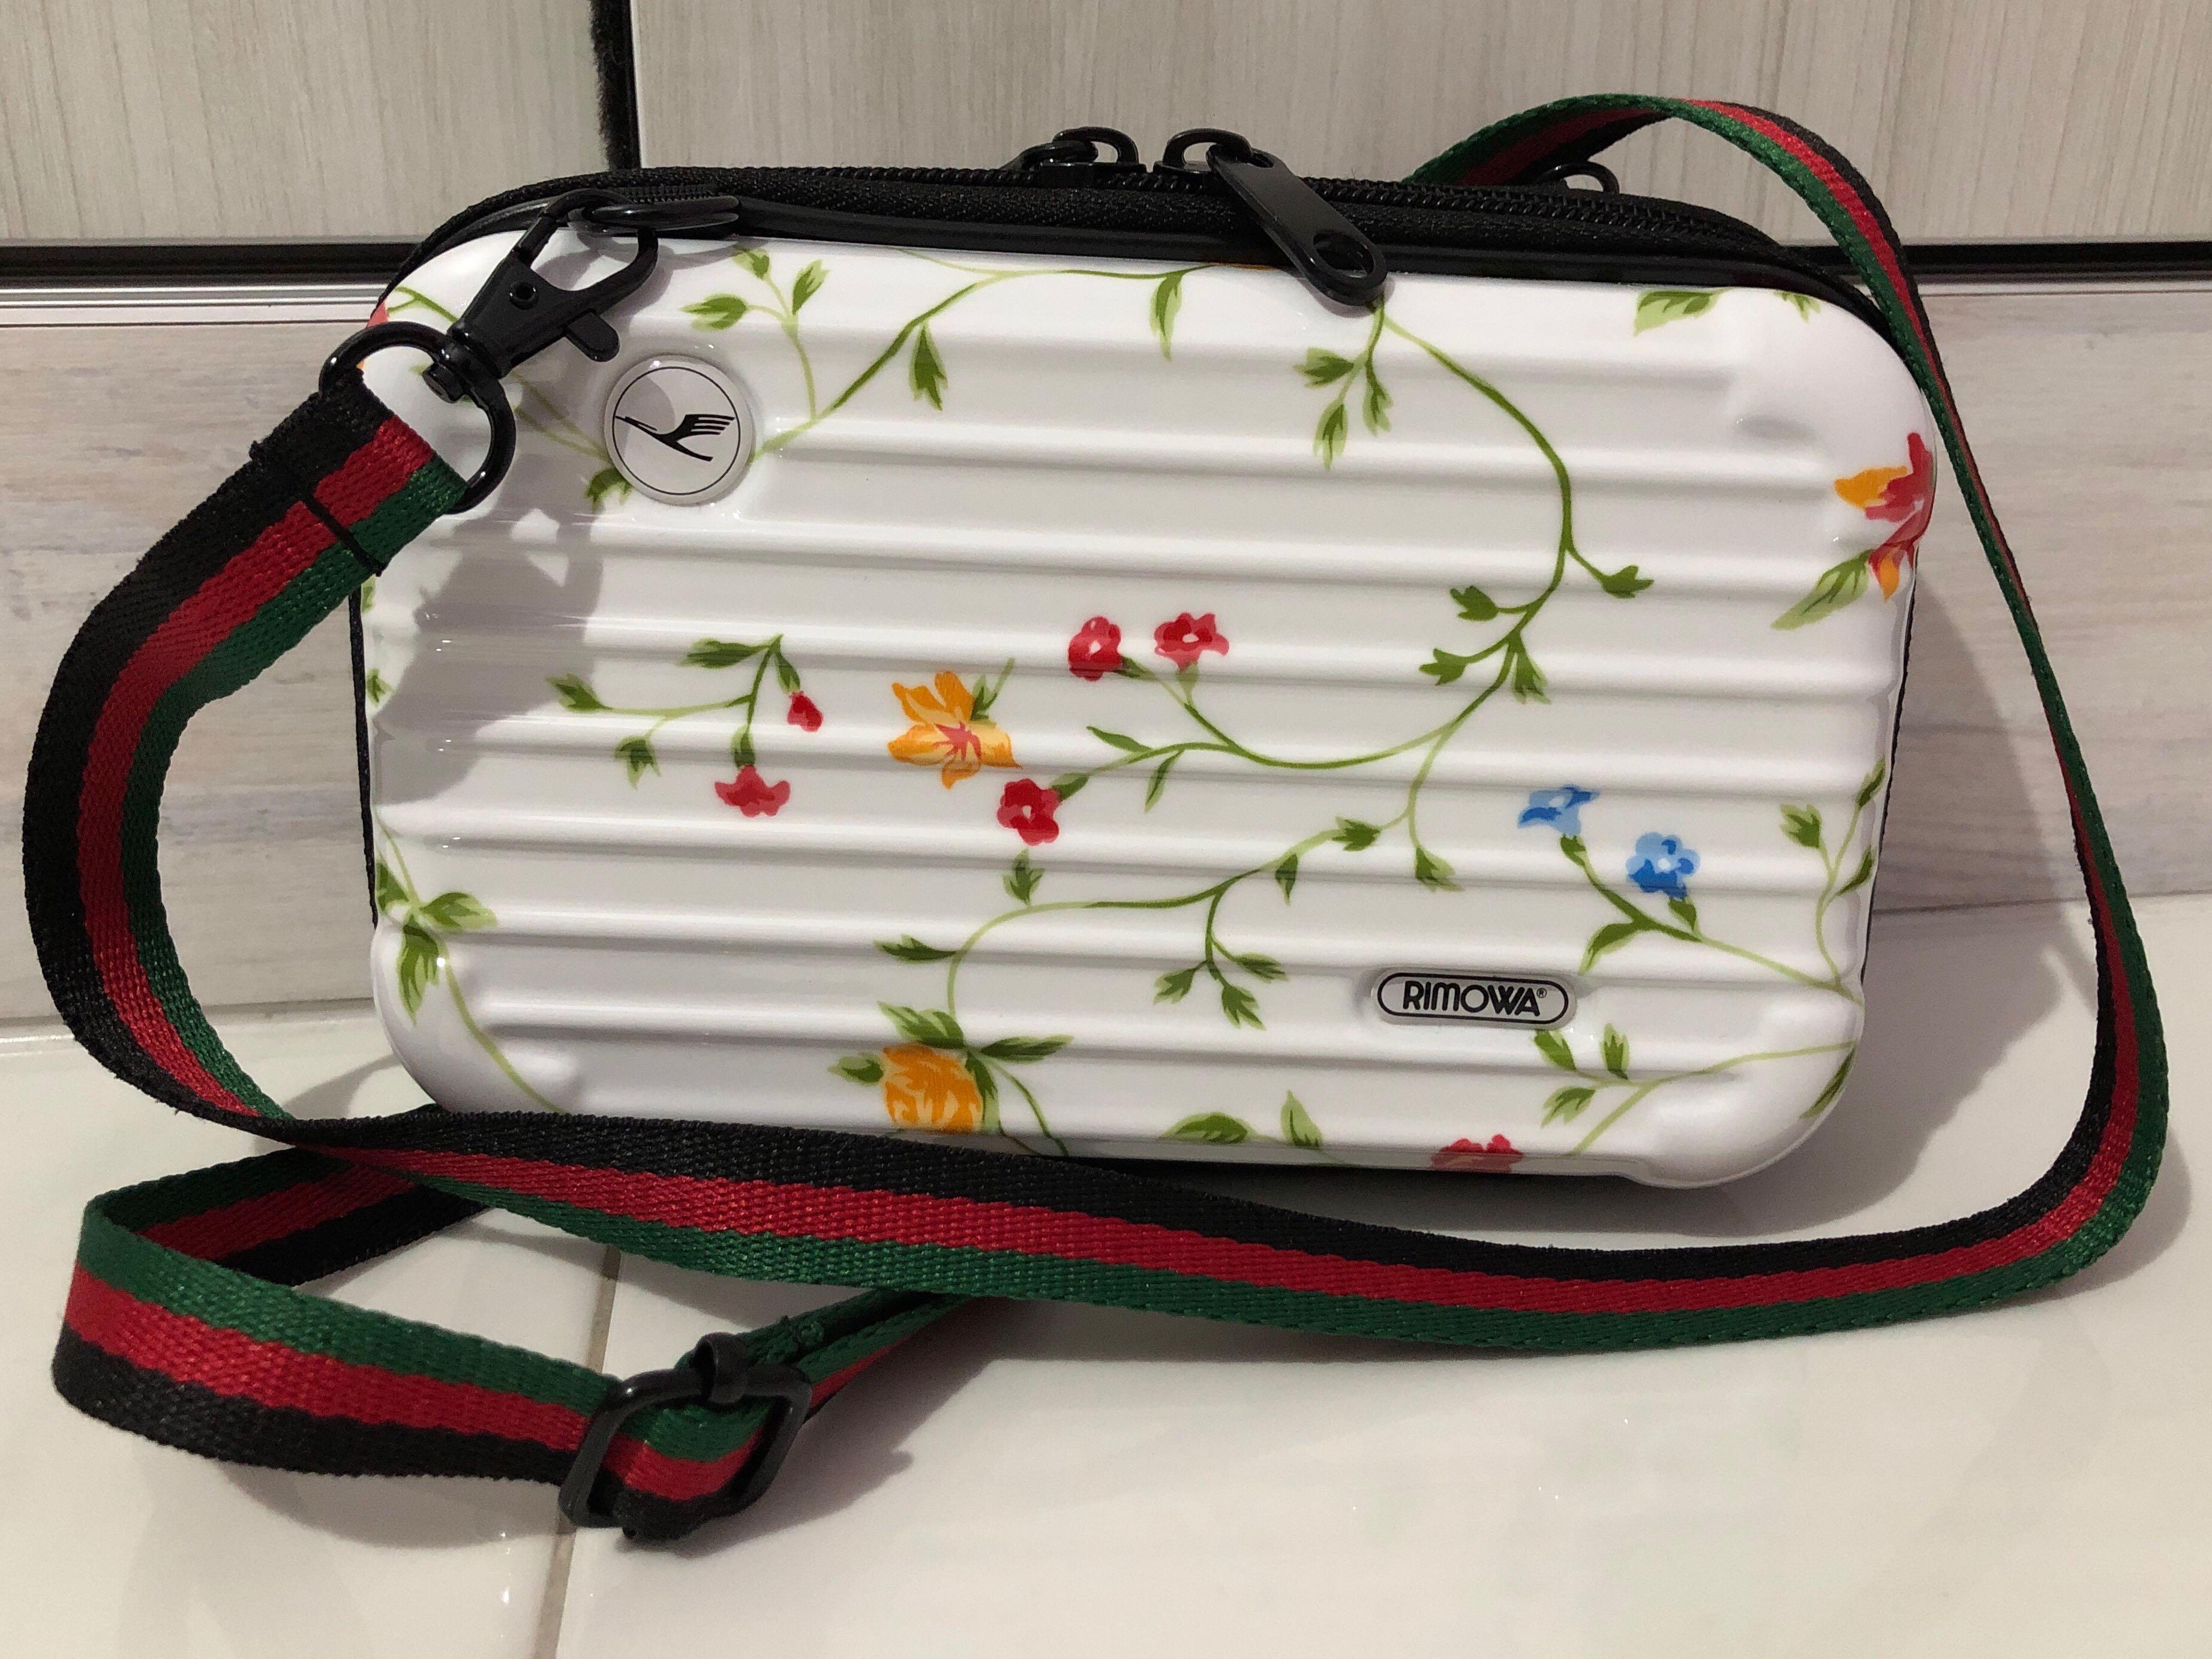 Mini Suitcase Sling Bag